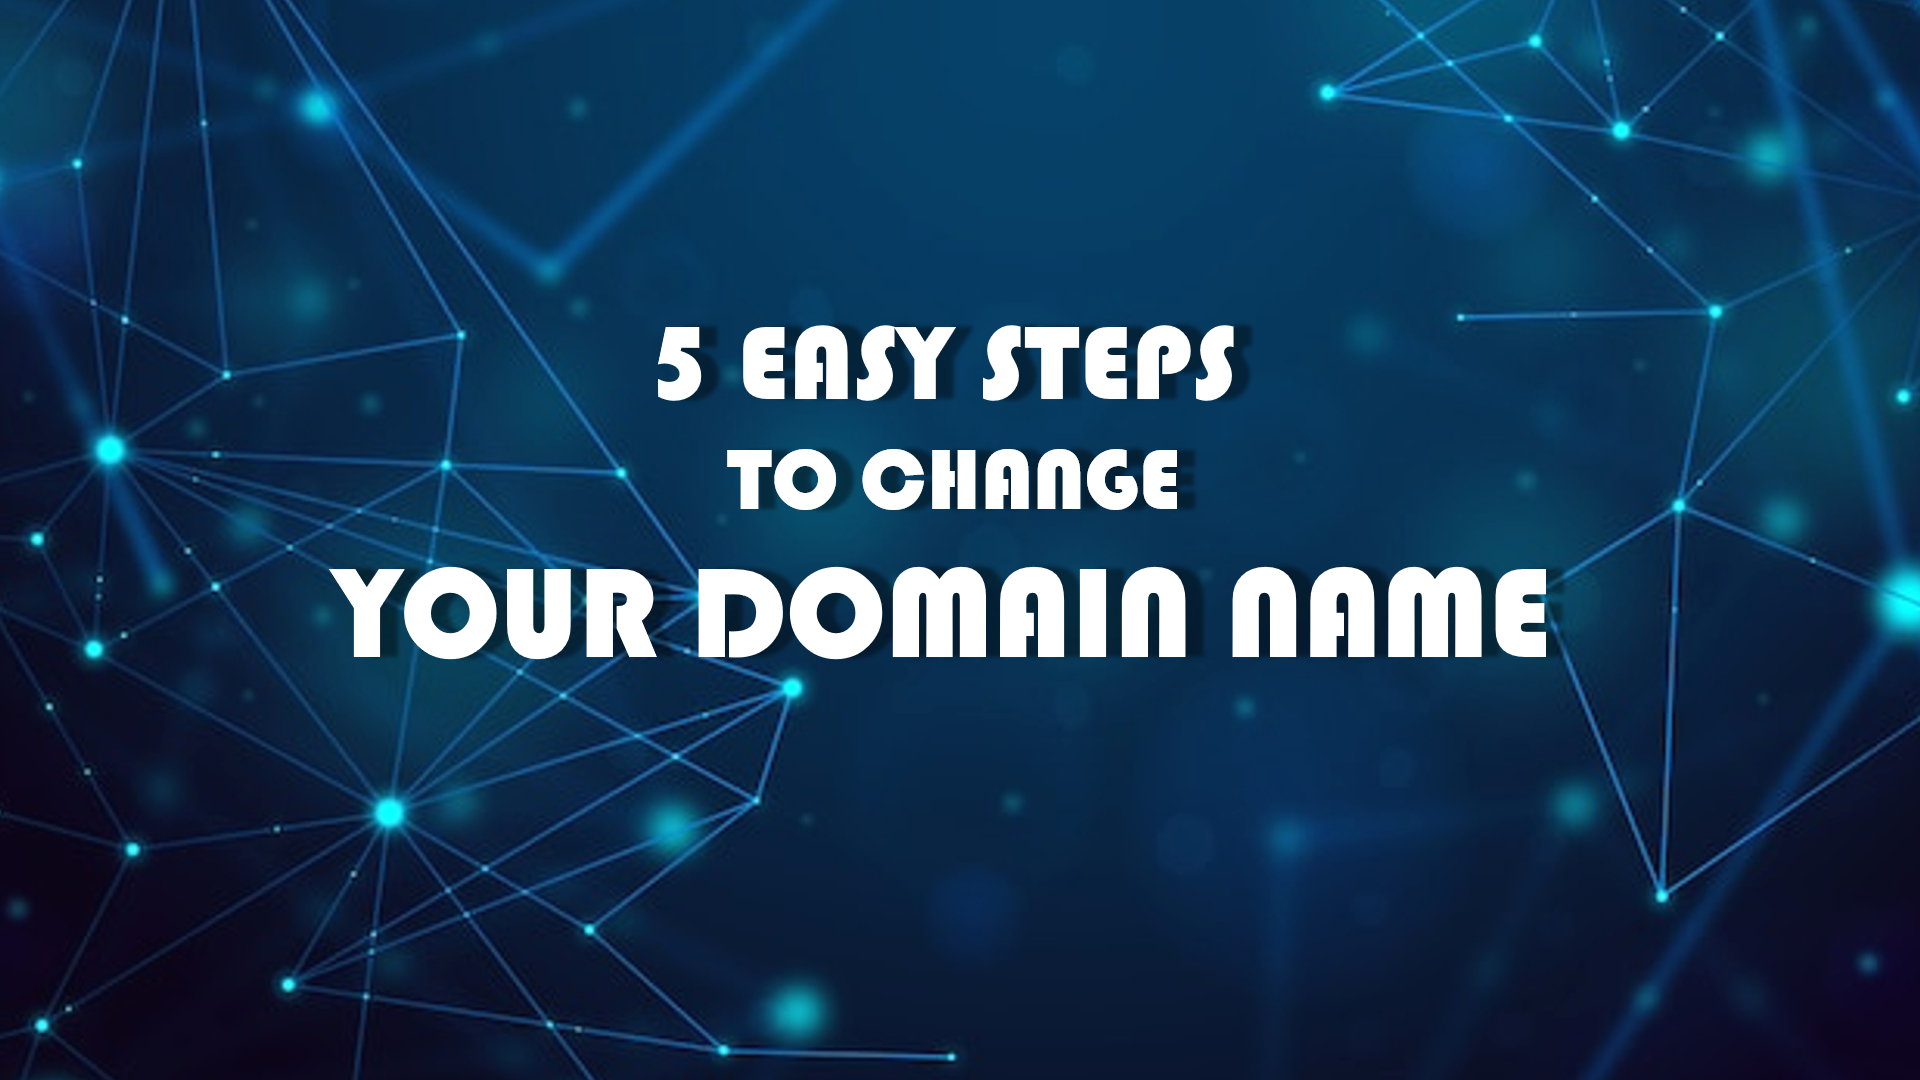 Change Domain Name